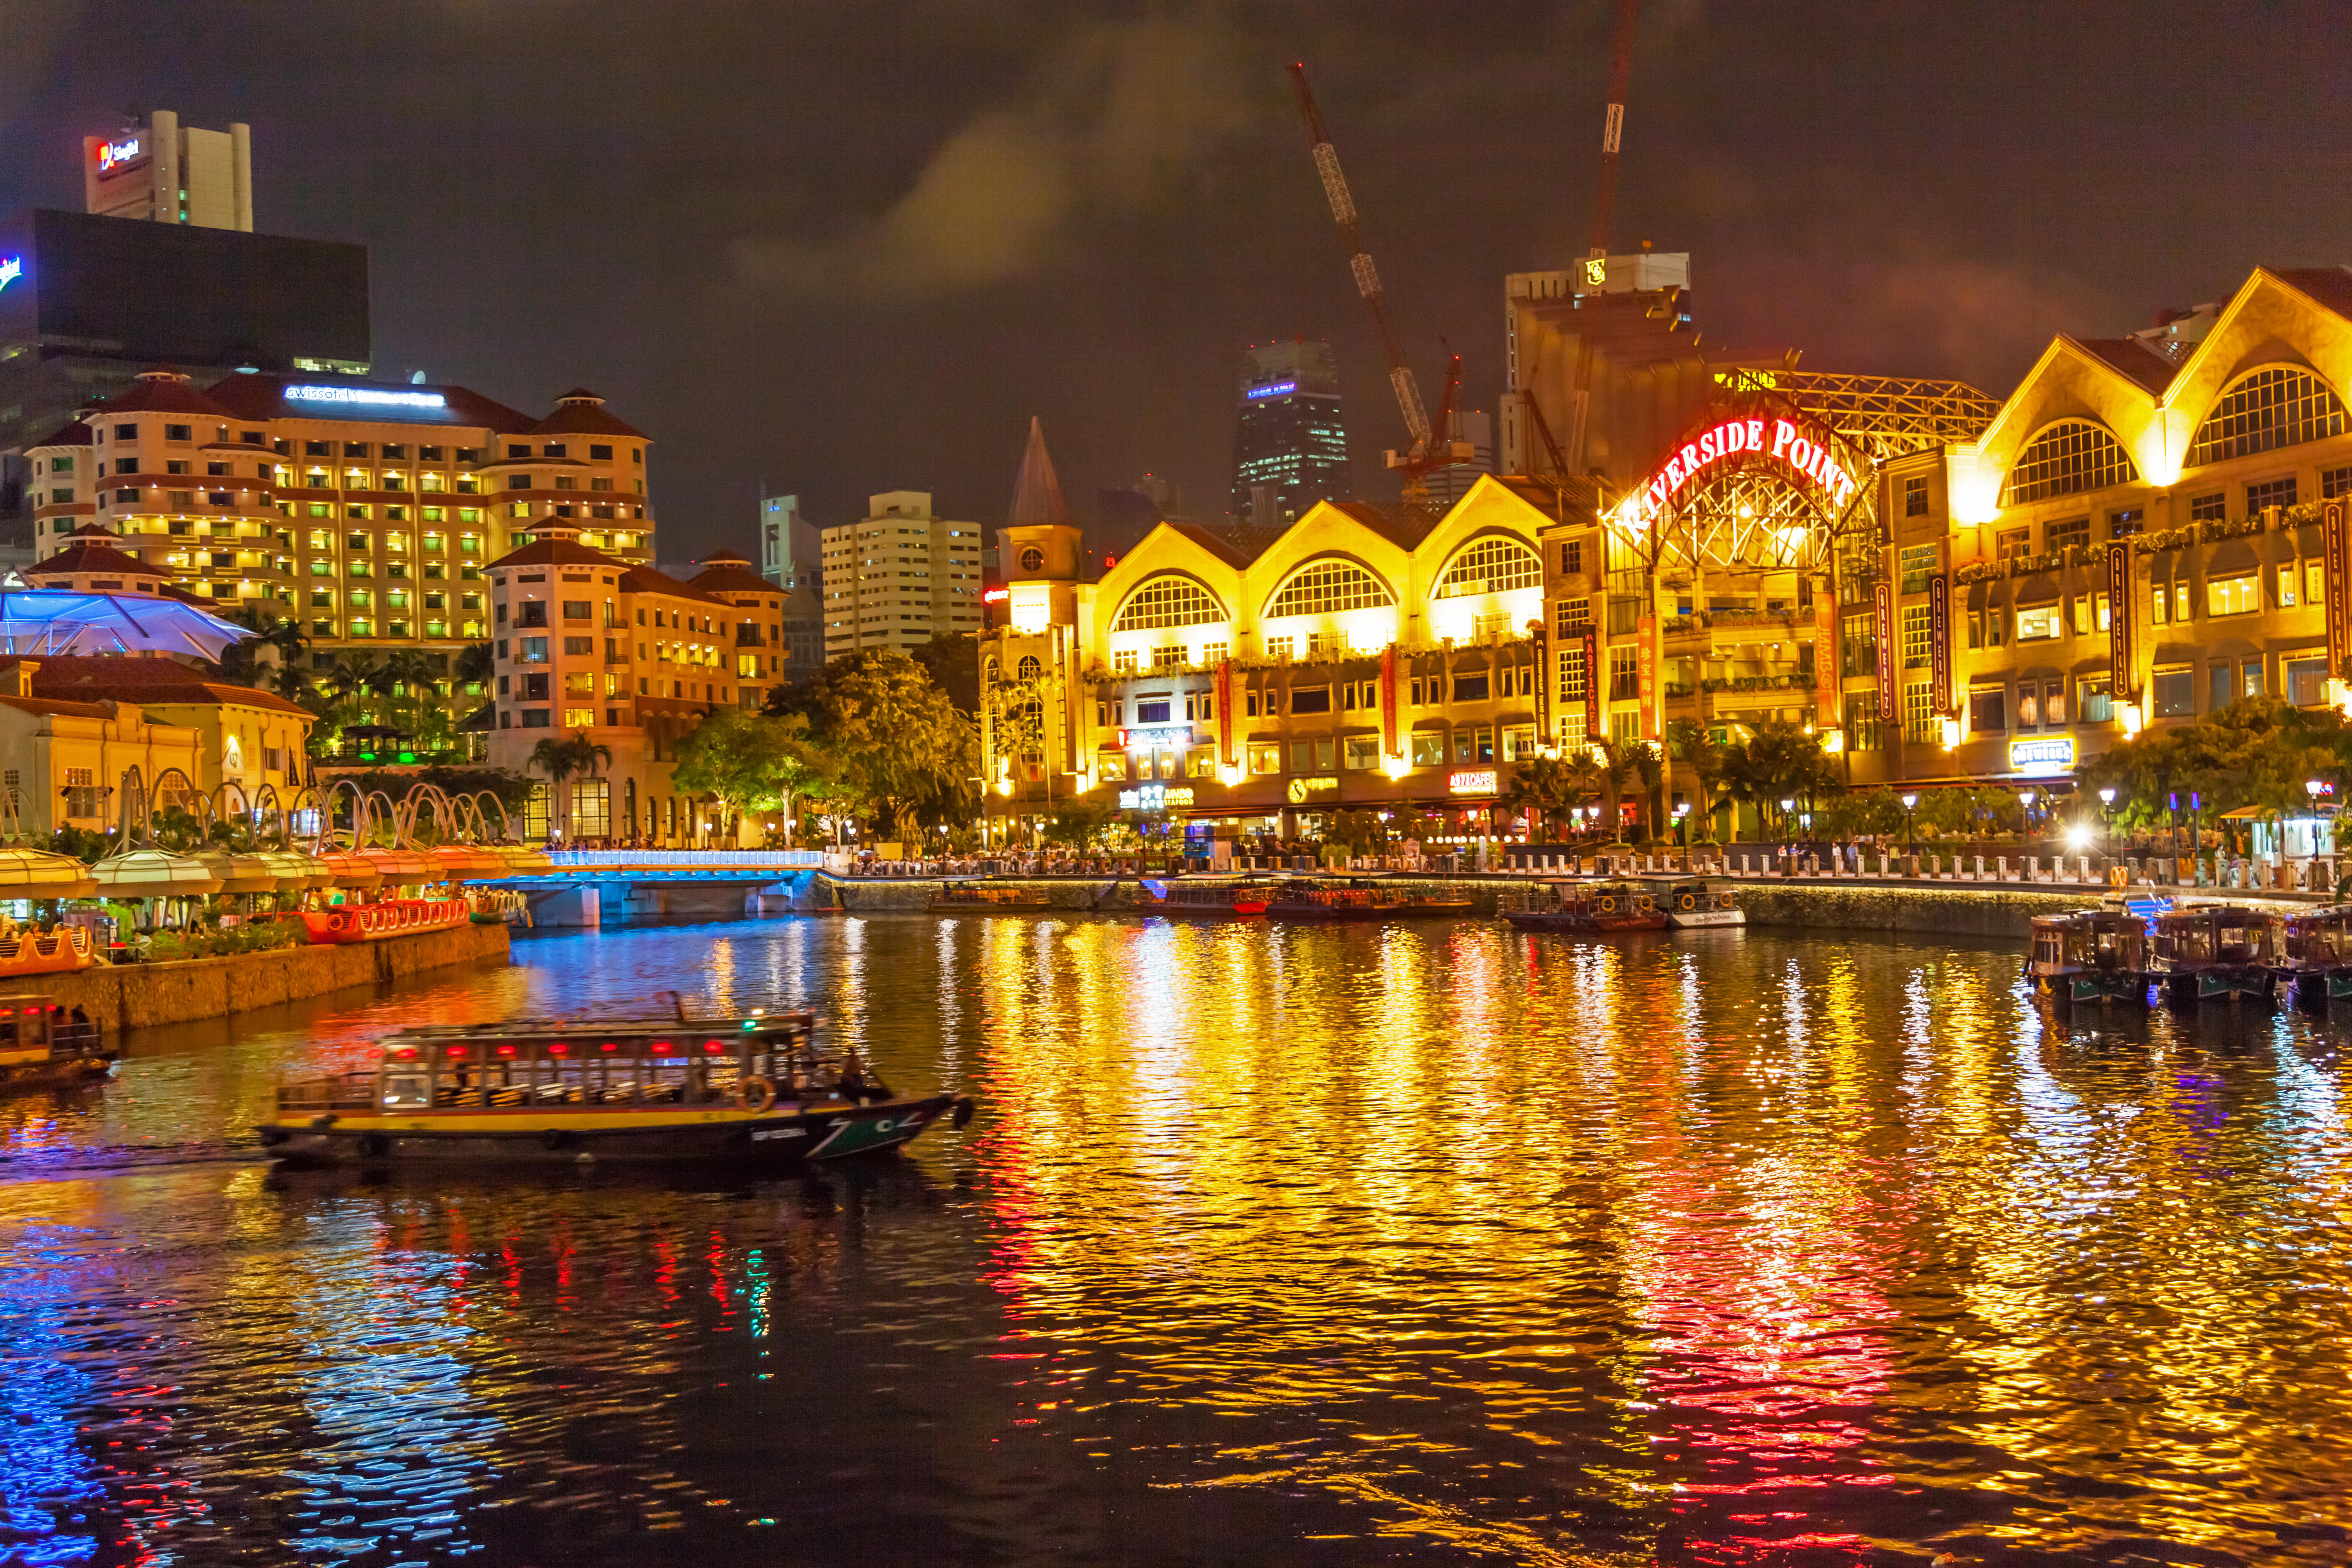 River Cruise At Singapore